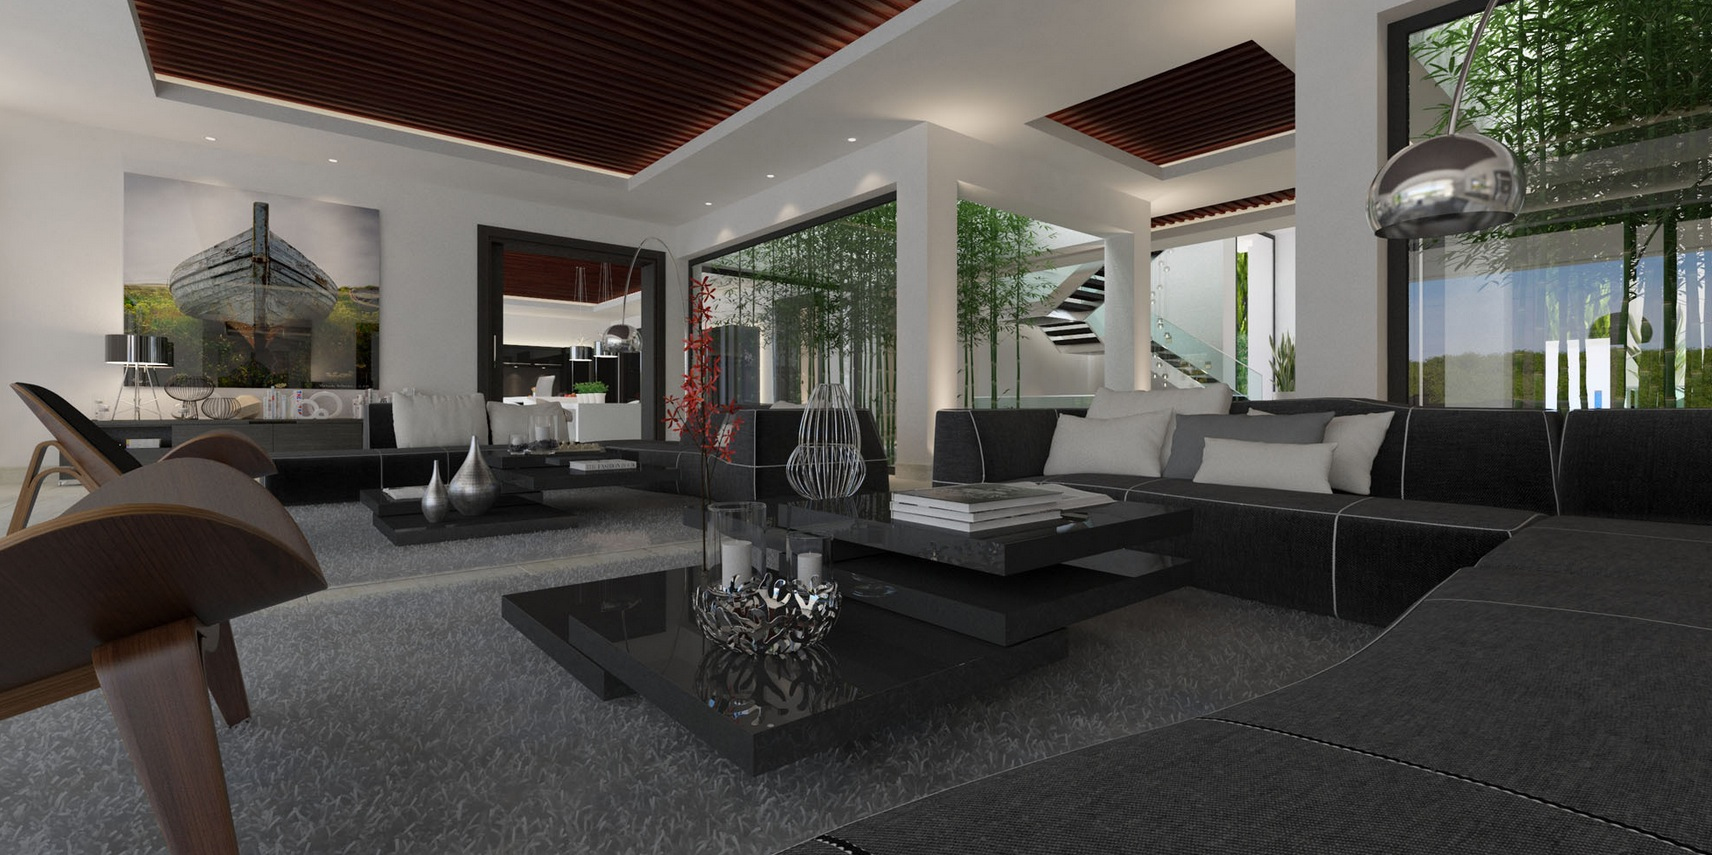 Luxurious 9 Bedroom Spanish Home With Indoor & Outdoor Pools 10